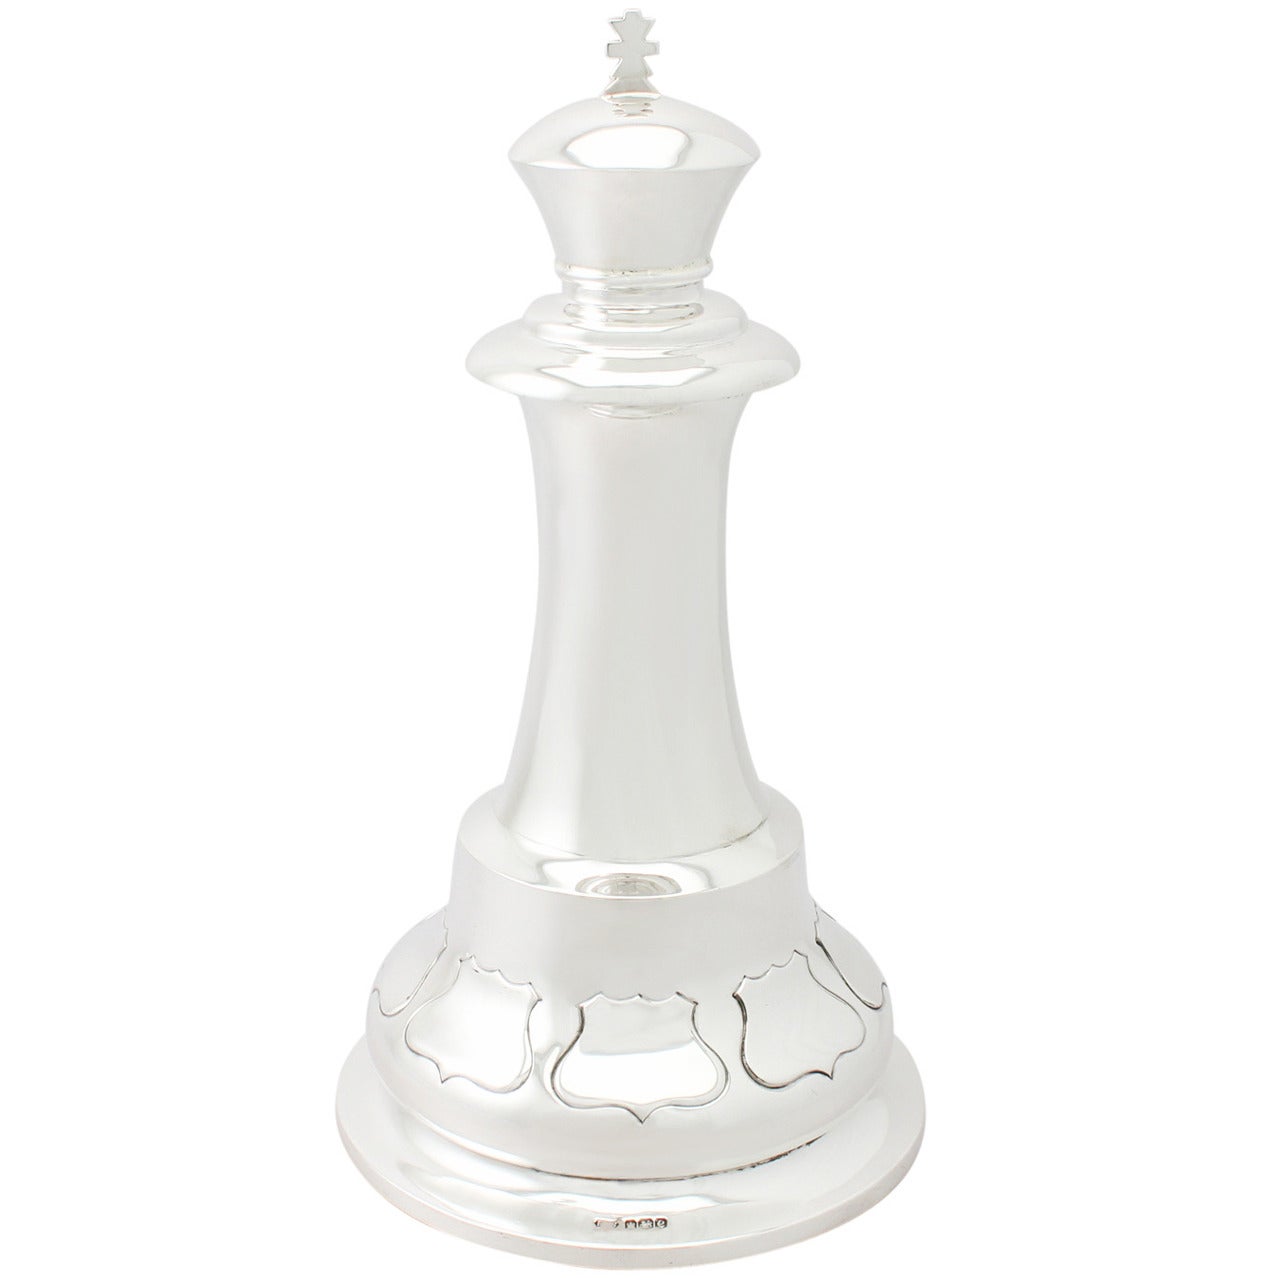 Sterling Silver Presentation Chess Trophy /Gentleman’s Desk Paperweight- Antique